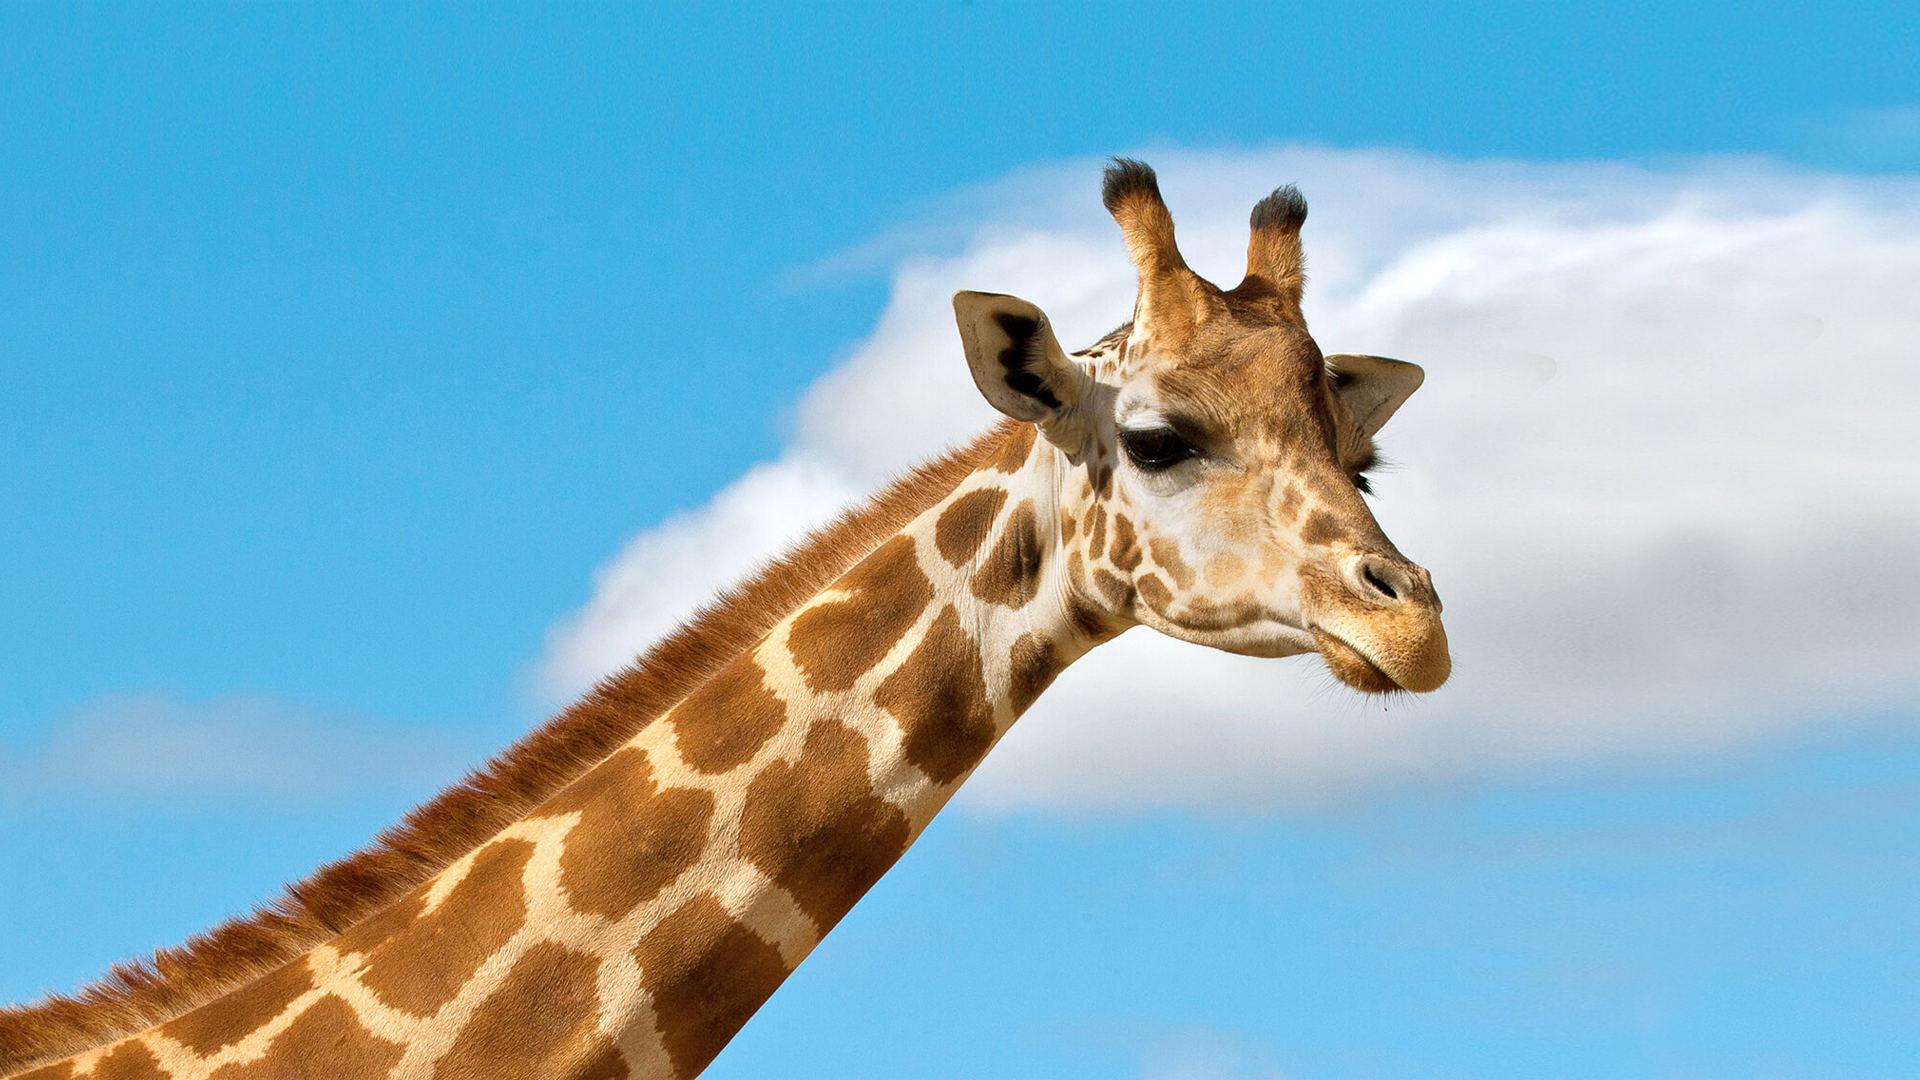 Ugandan giraffe against a blue sky background